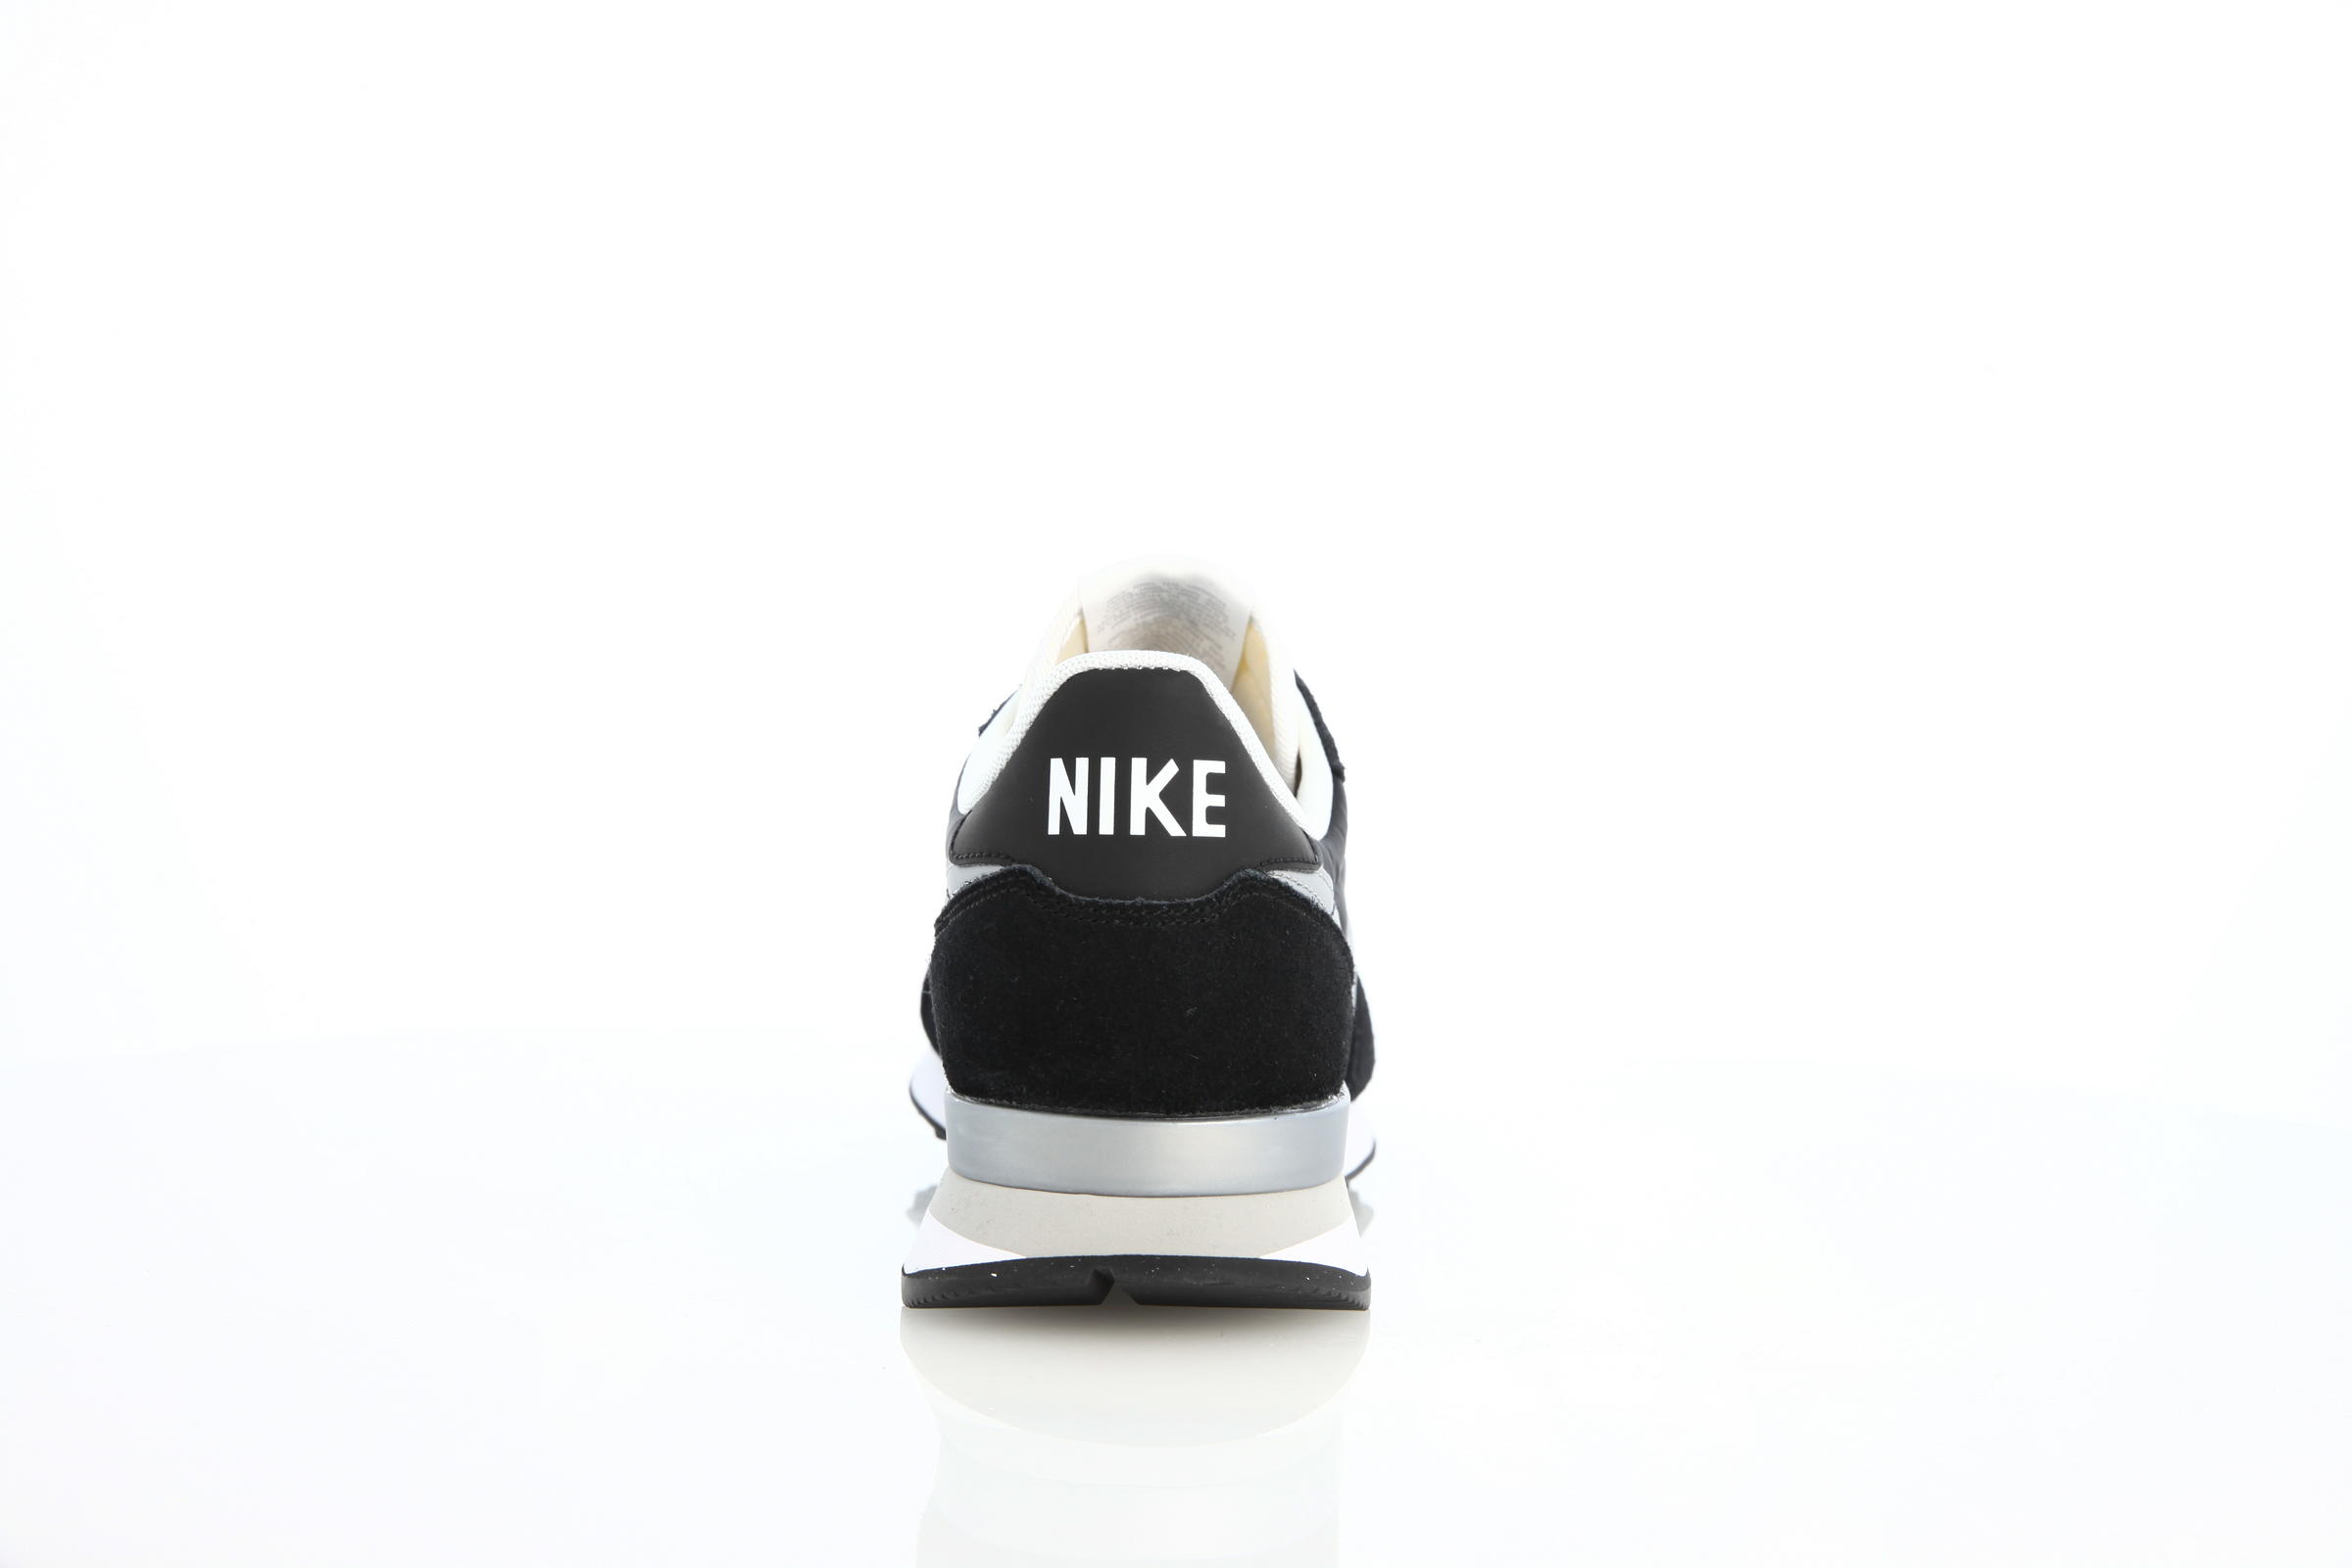 Nike Internationalist "Silver"